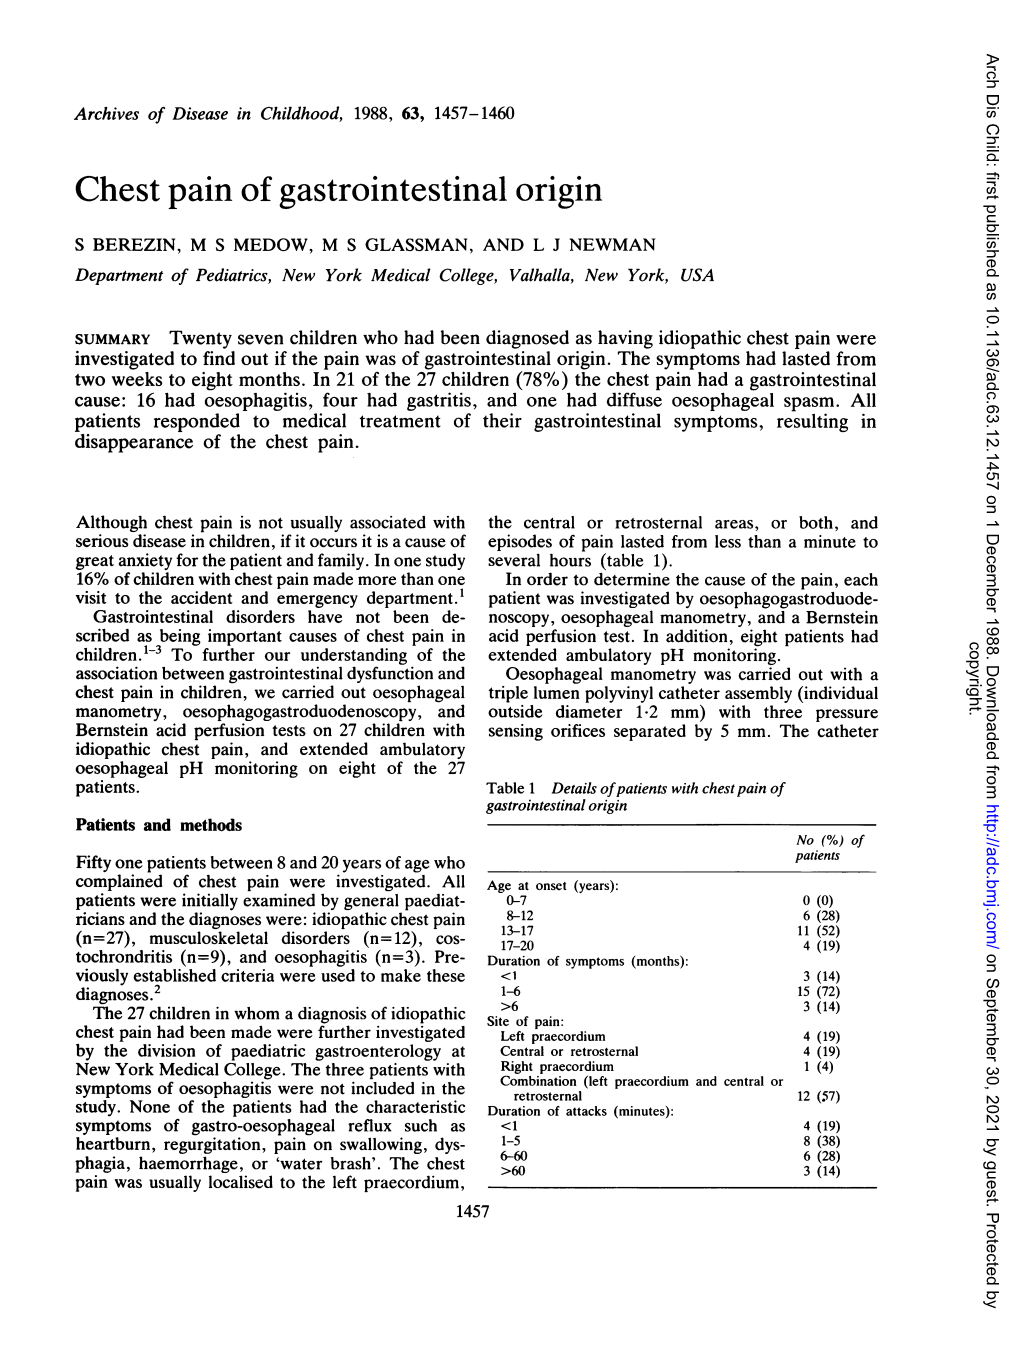 Chest Pain of Gastrointestinal Origin